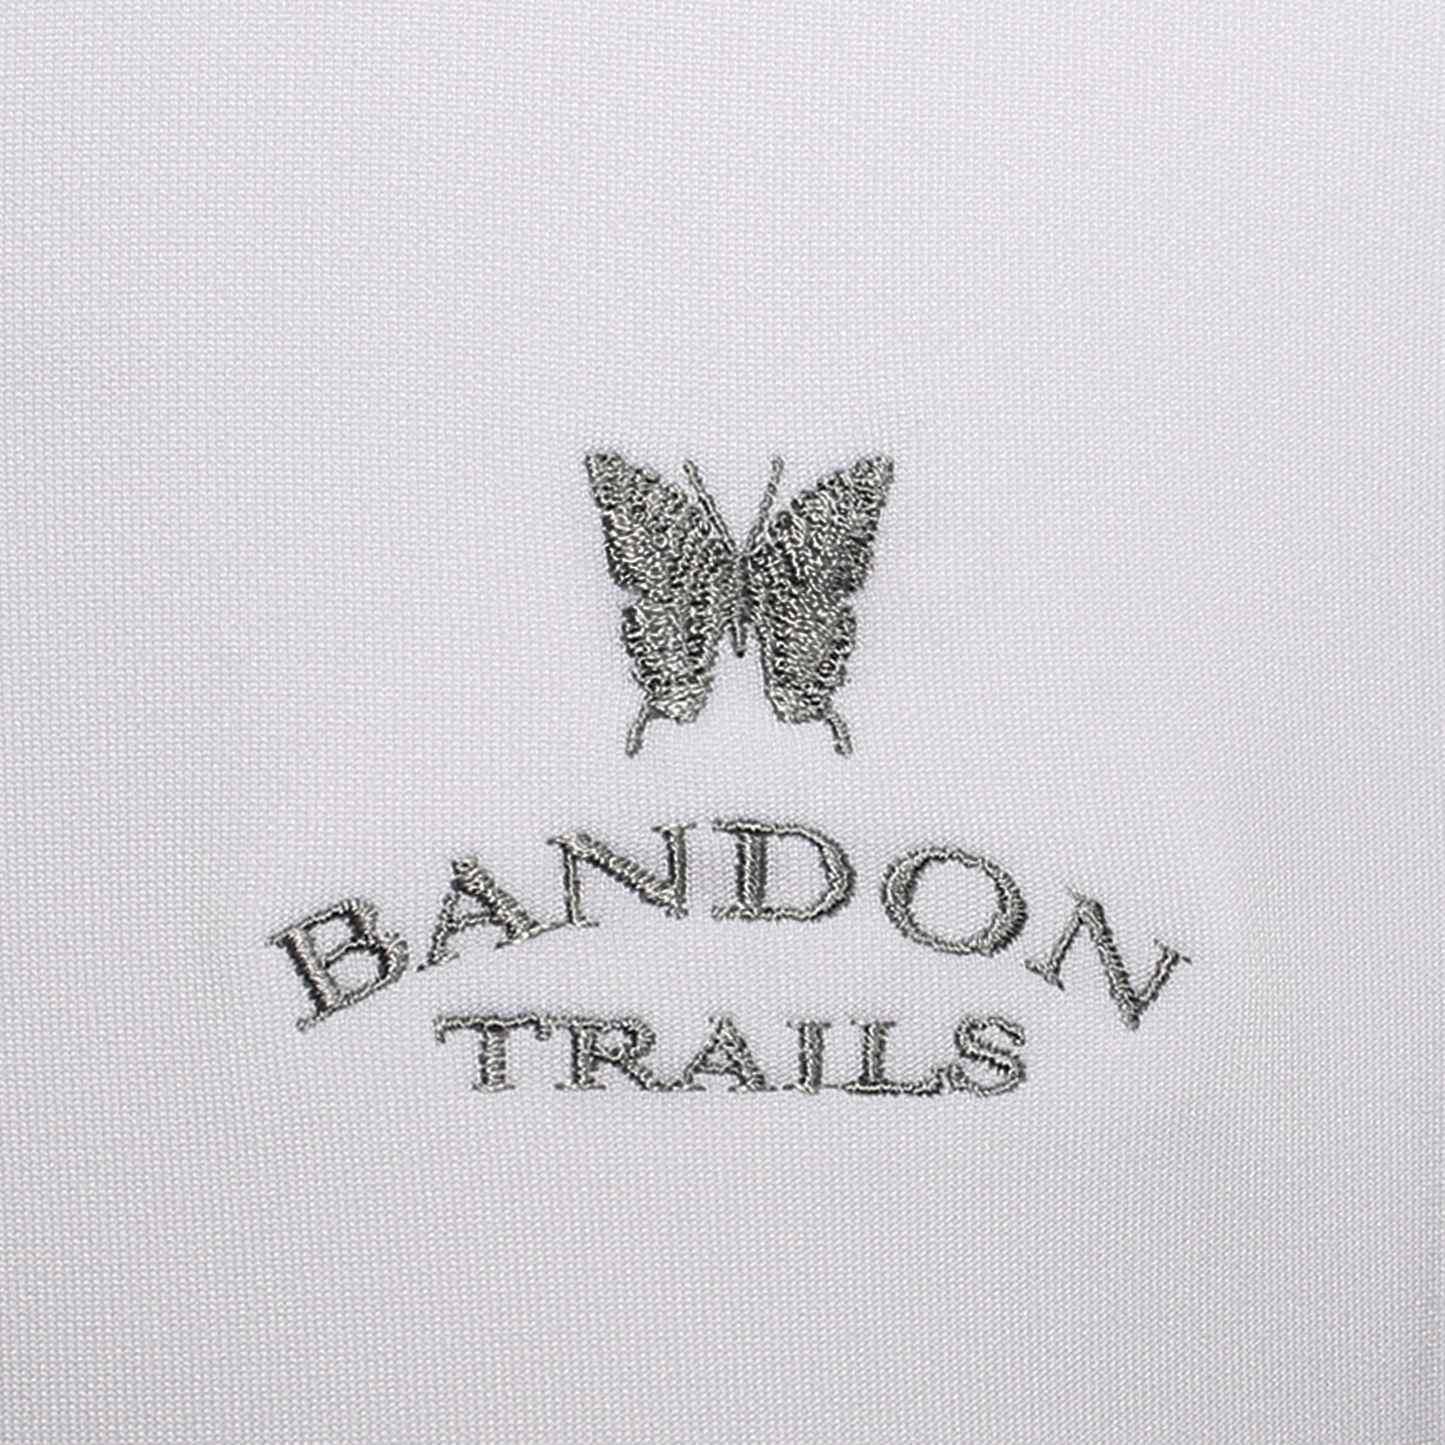 Diaz Pullover - Bandon Trails